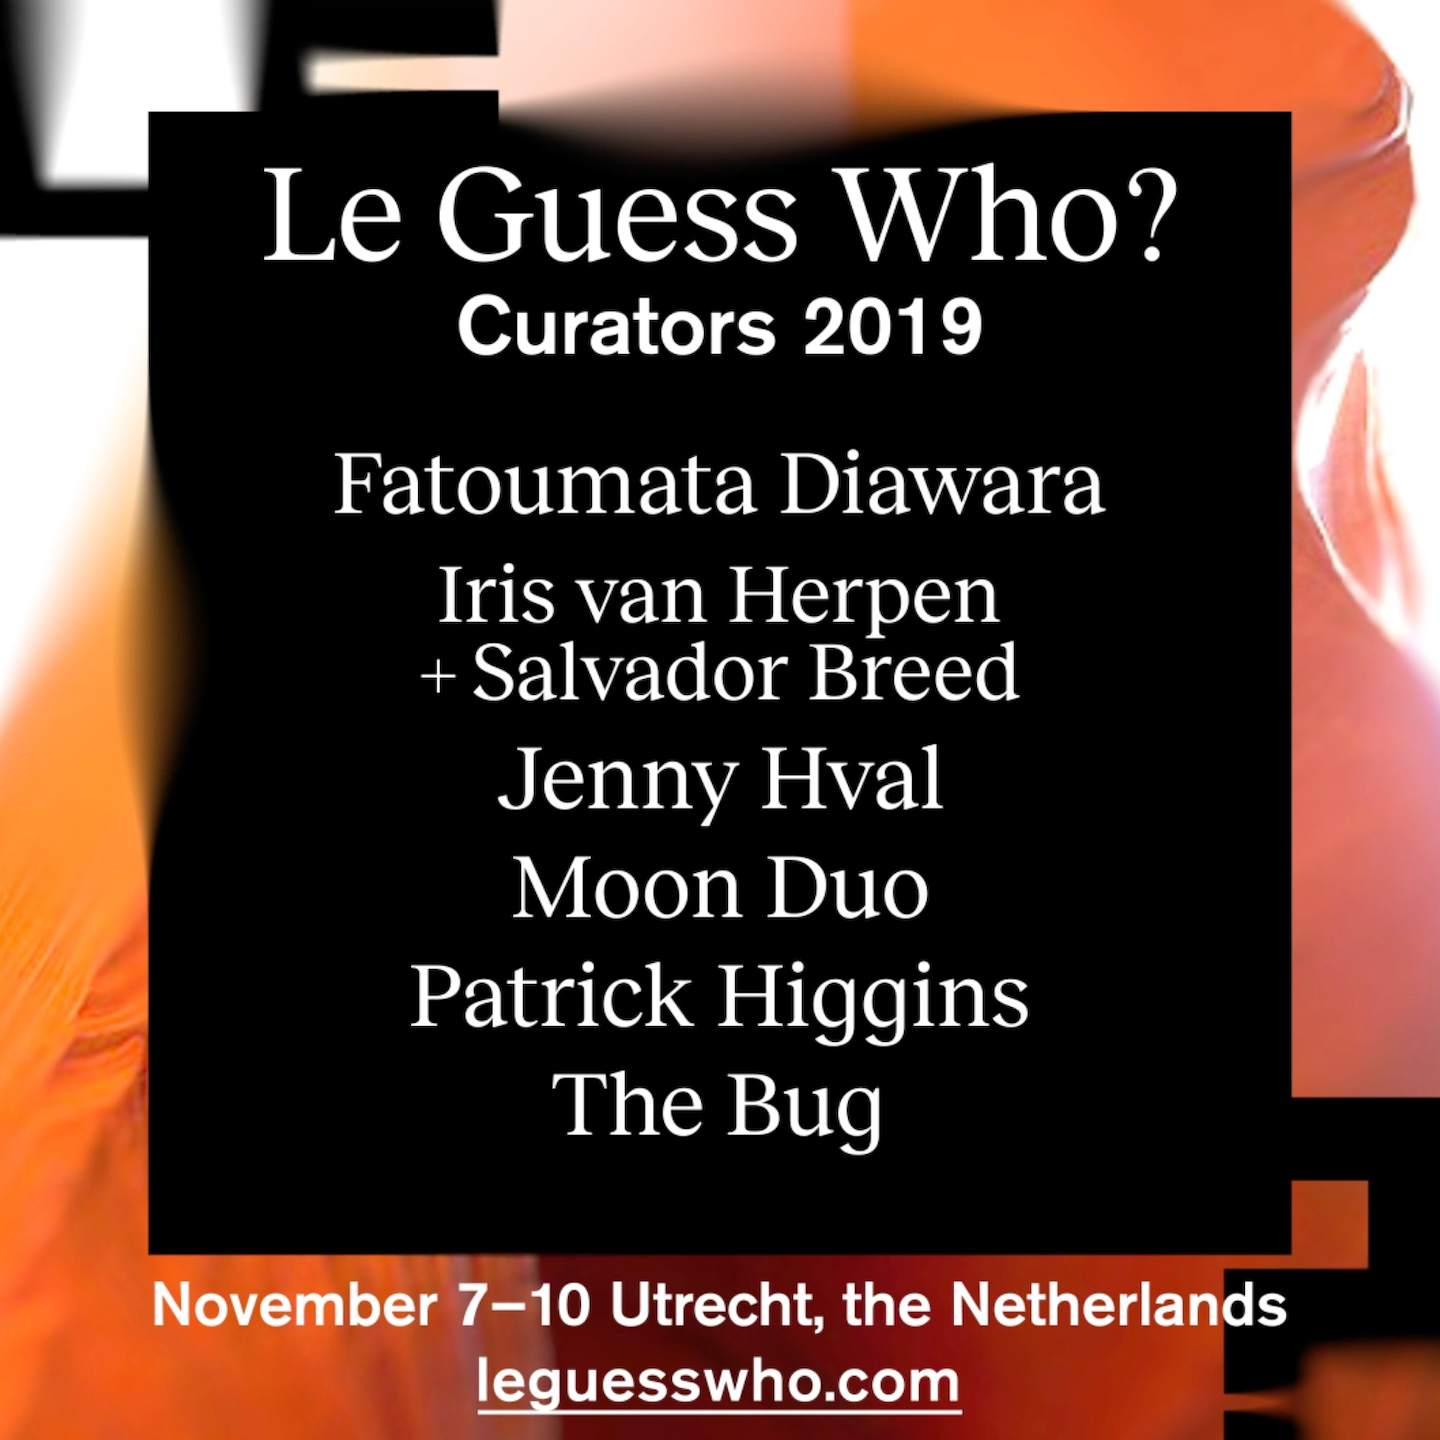 Utrecht's Le Guess Who? festival reveals curators for 2019 image